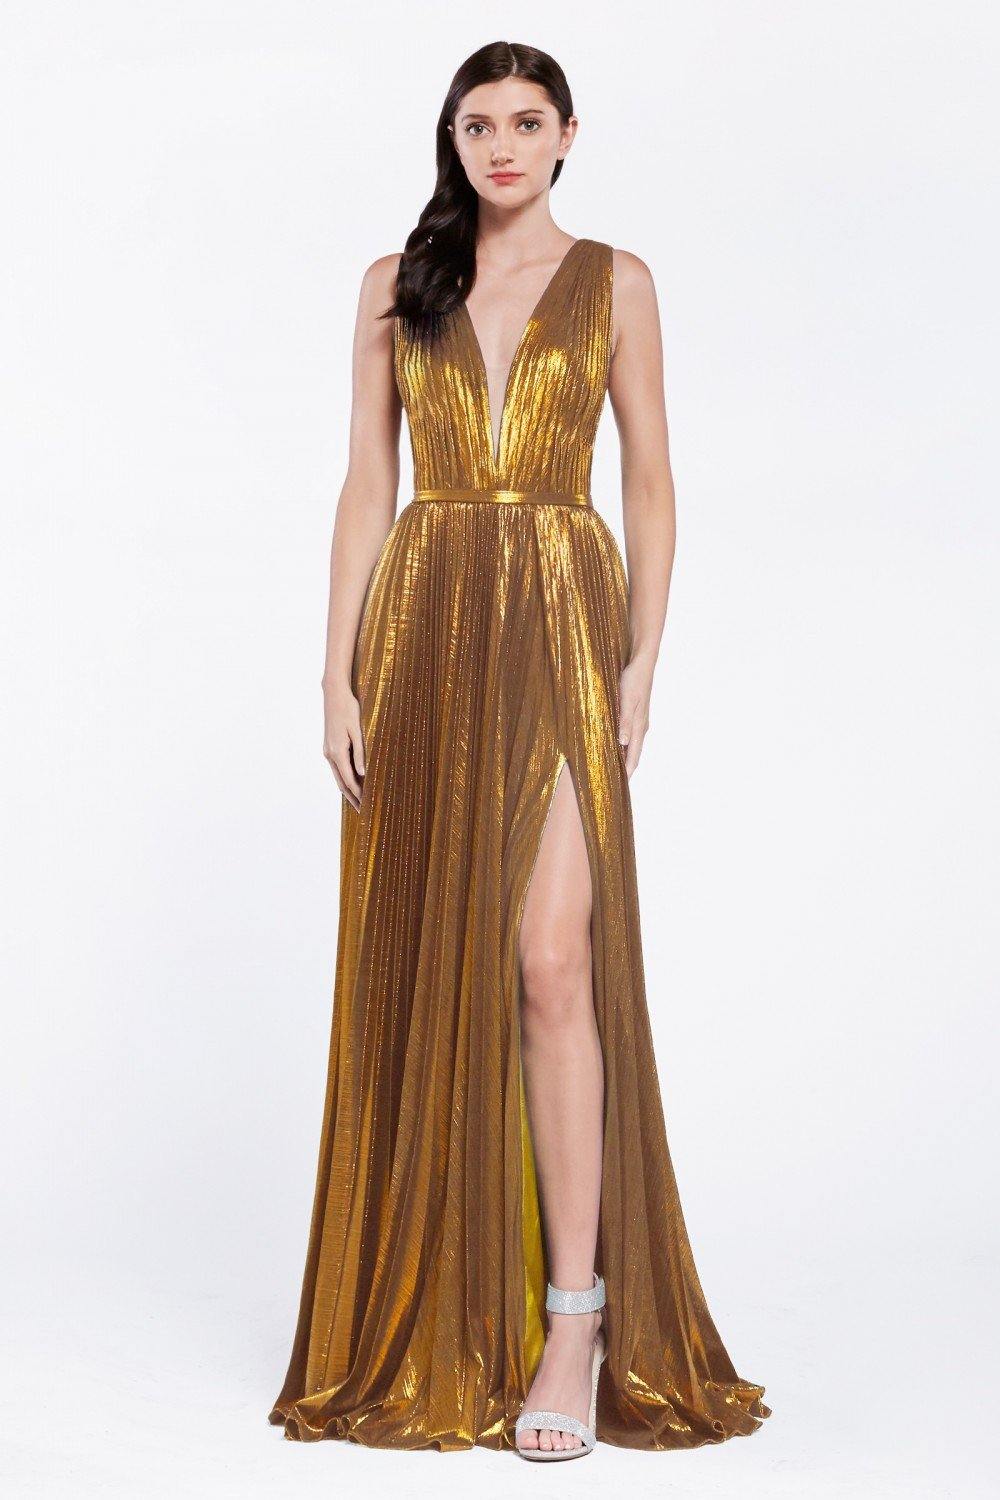 Metallic Long Prom Dress Evening Gown - The Dress Outlet Cinderella Divine